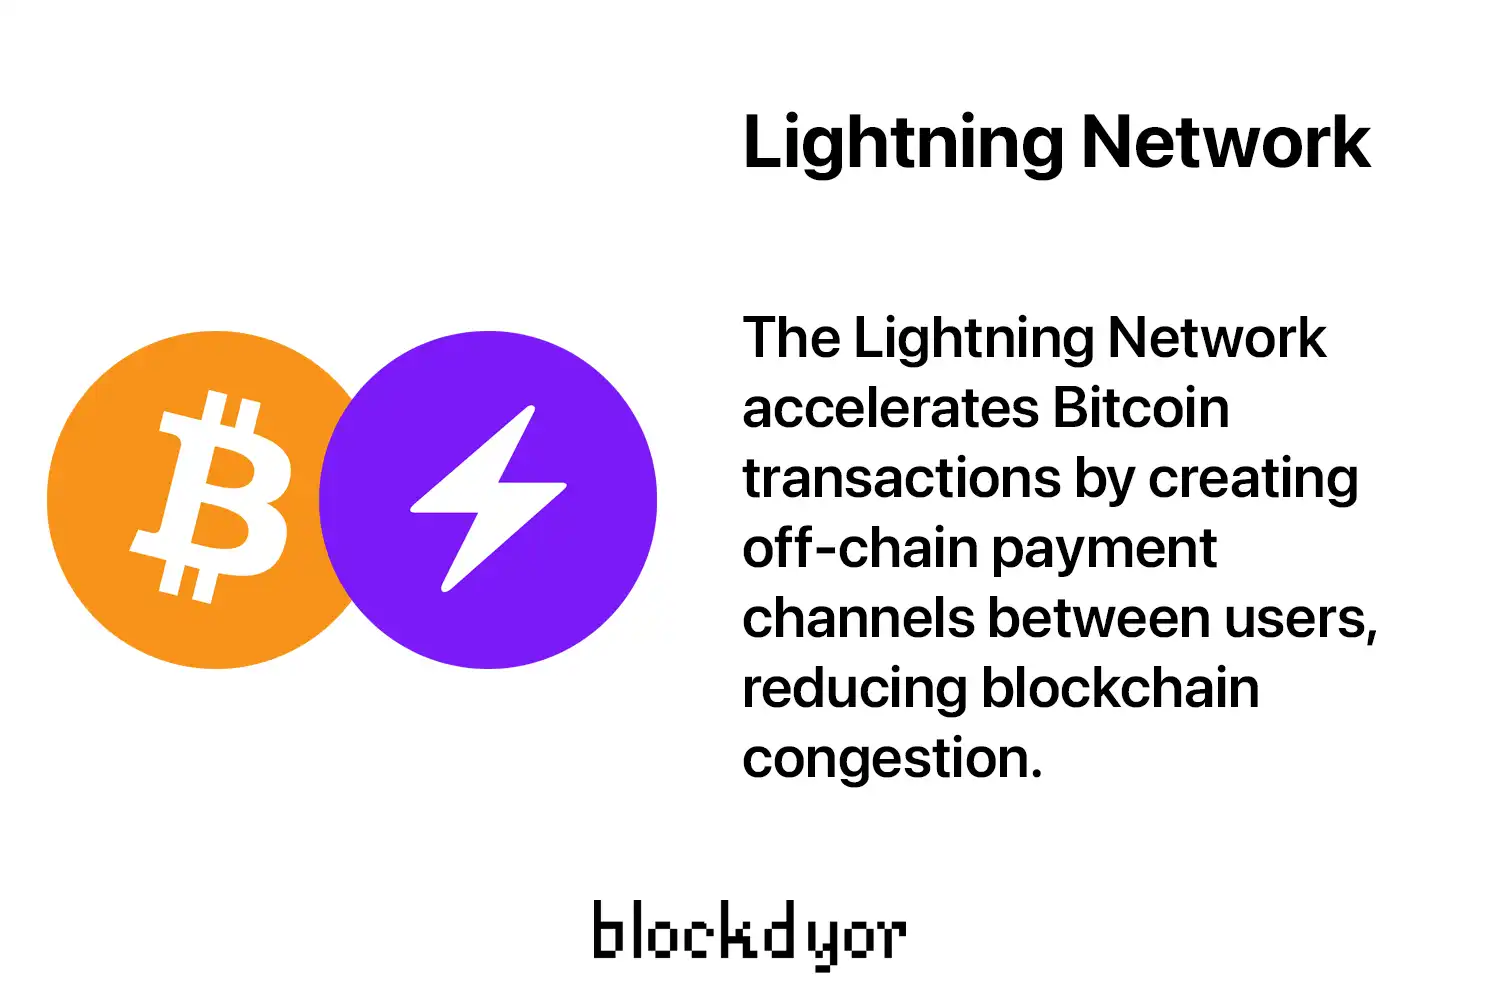 Lightning Network Overview